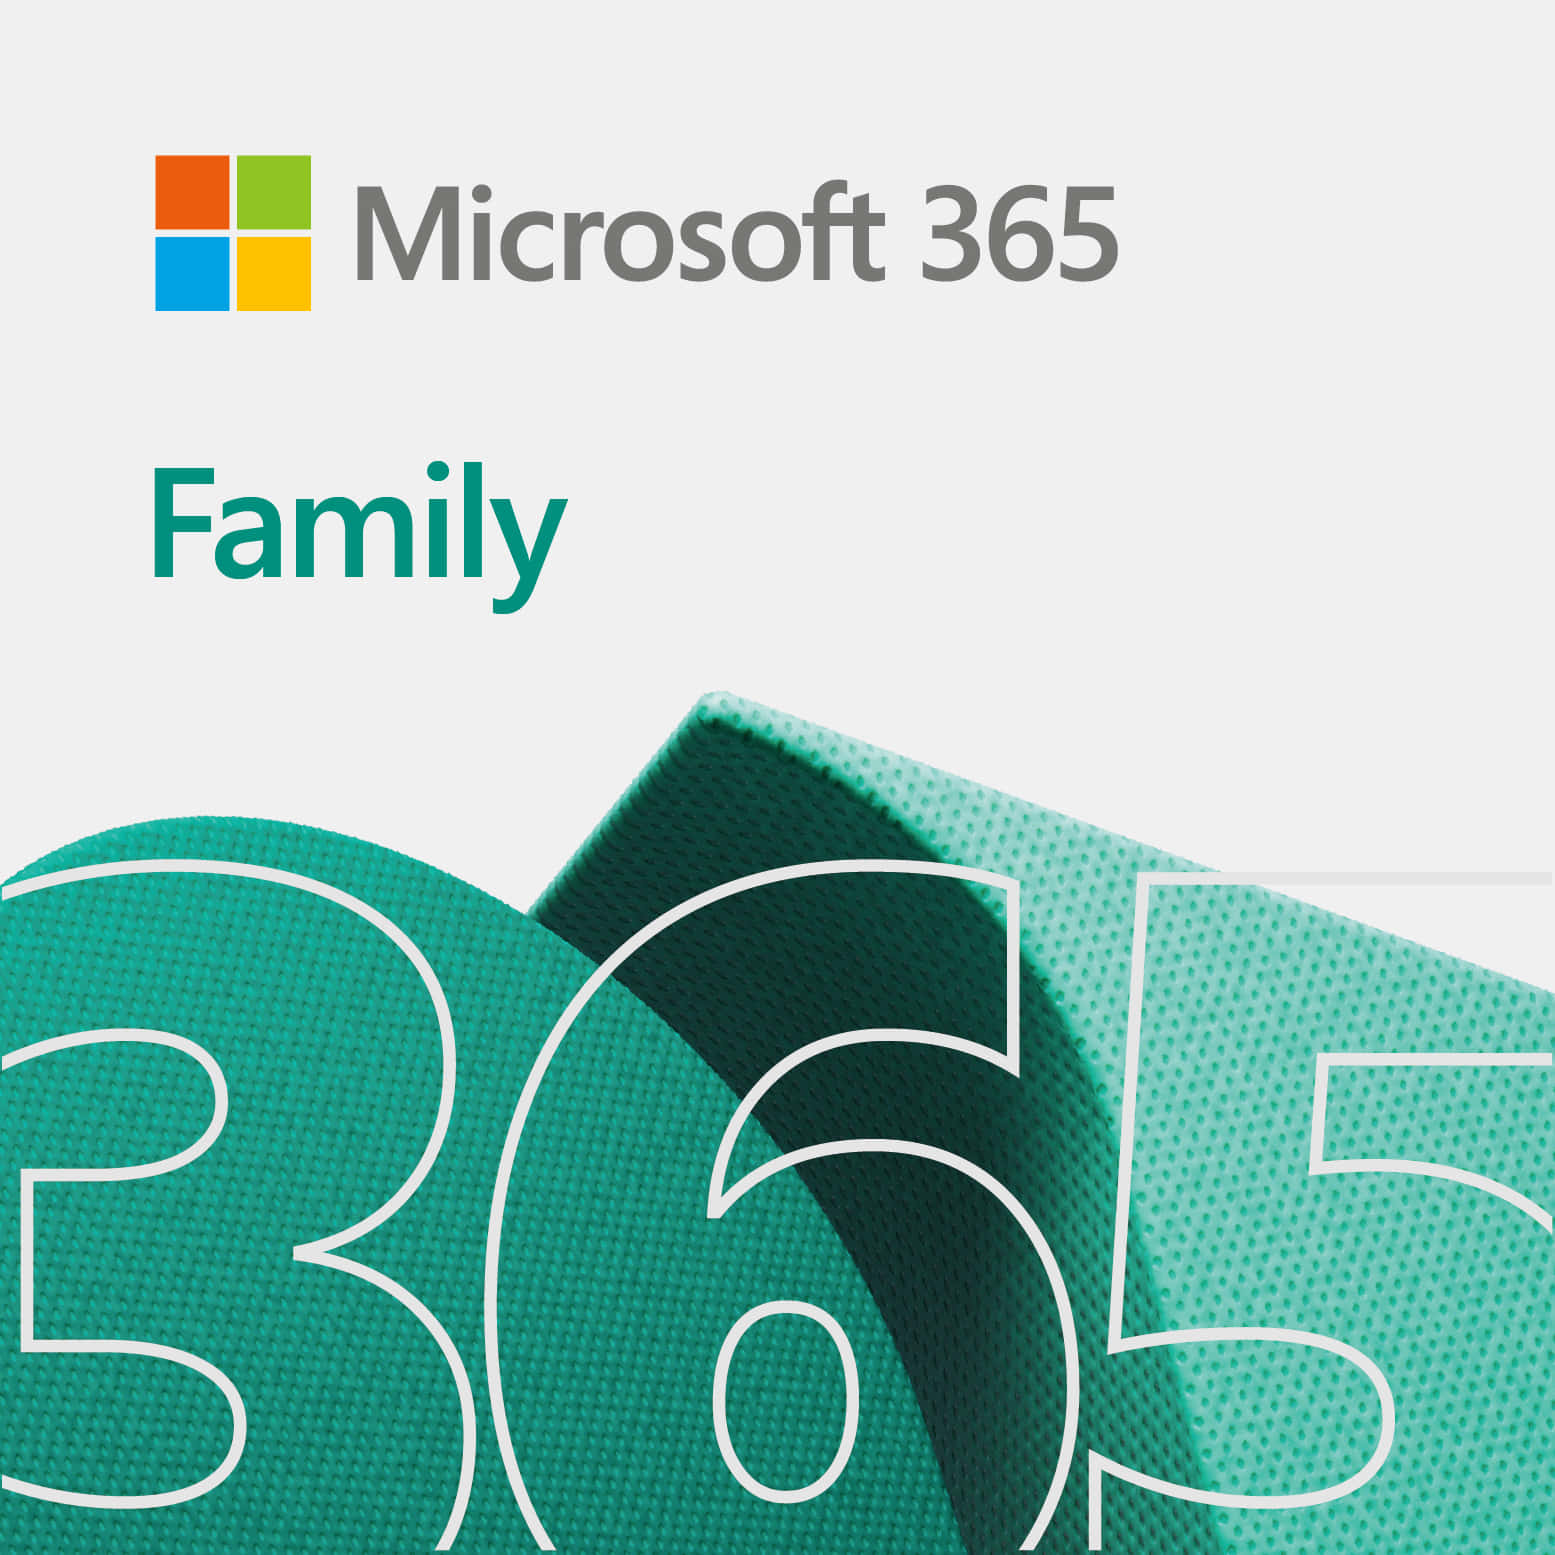 Celebrating 30 years of Microsoft Innovation